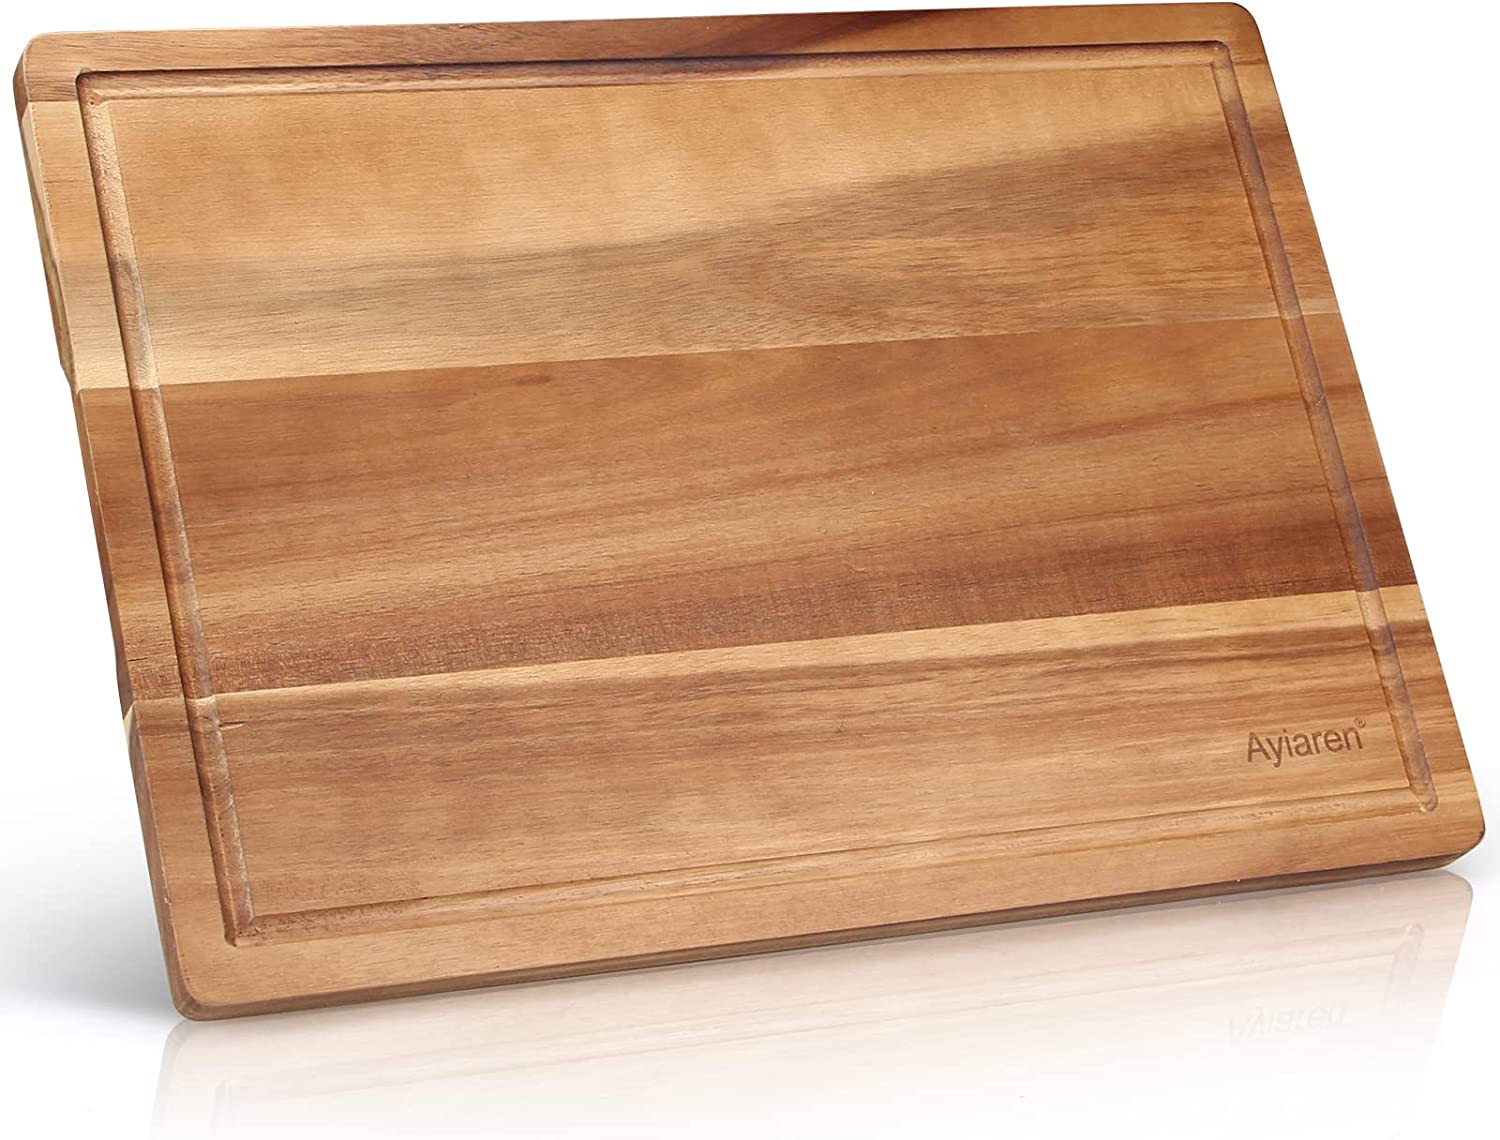 Kitchenaid Gourmet Birchwood Nonslip Thick Chopping Board, 12x16-inch, Wood  